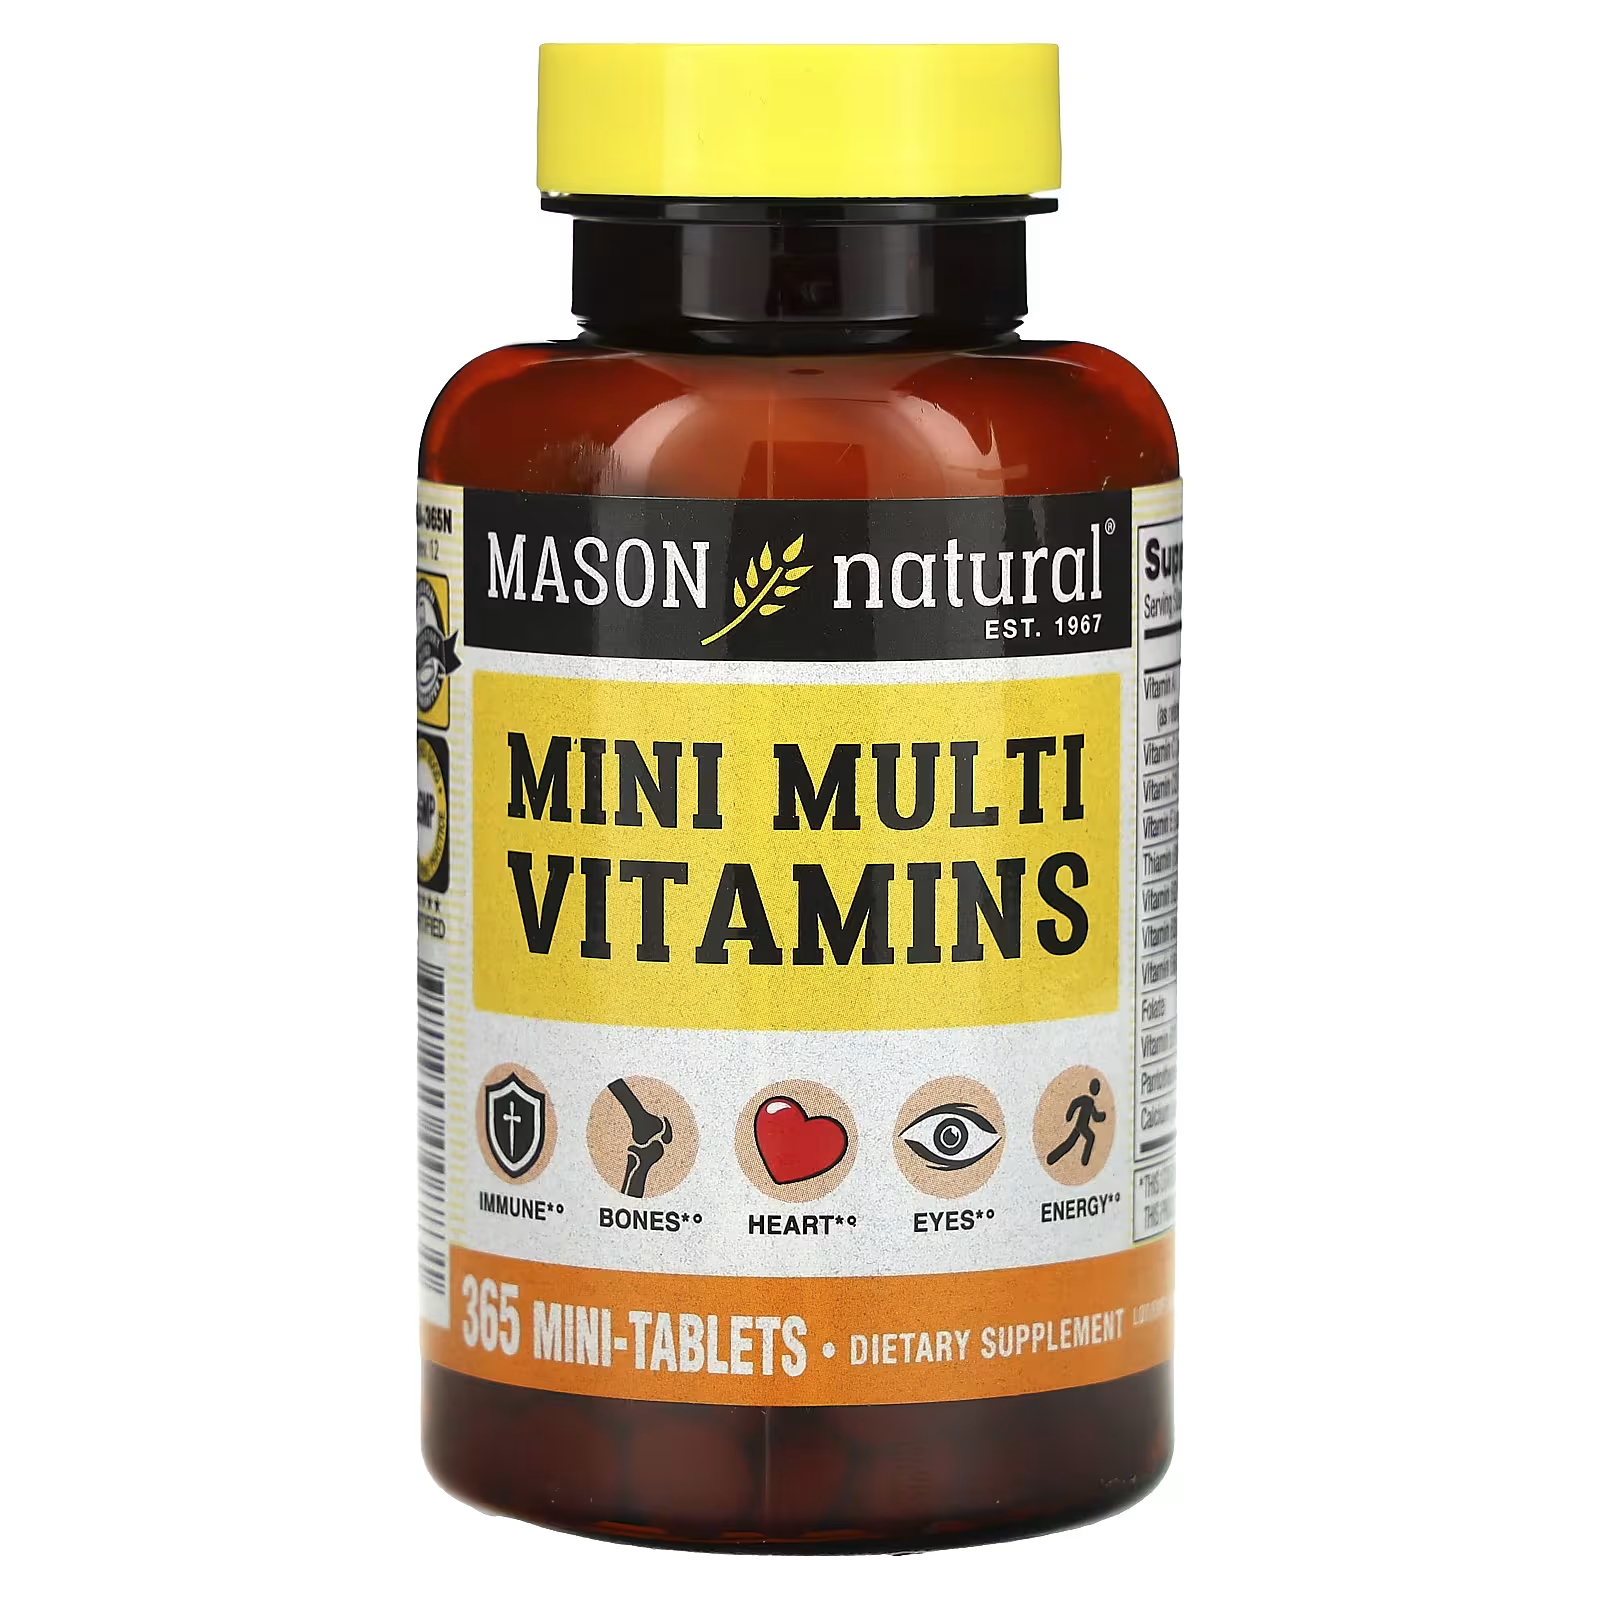 Mason Natural Mini Мультивитамины 365 мини-таблеток mason natural mini мультивитамины 365 мини таблеток